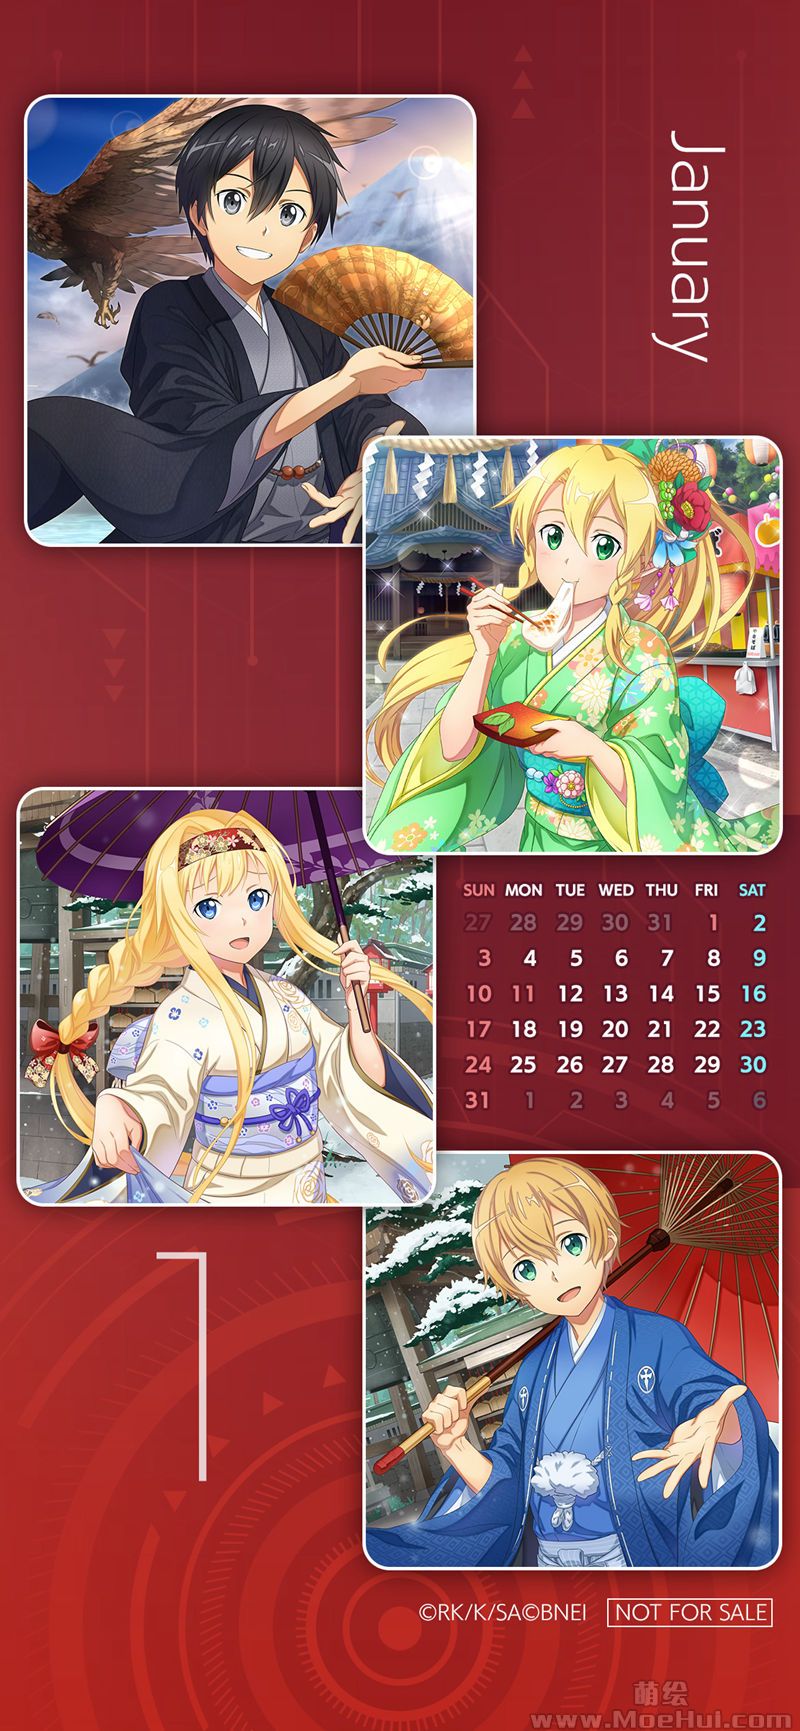 SAO 2021 Mobile Calendar Wallpapers [12P/10MB]